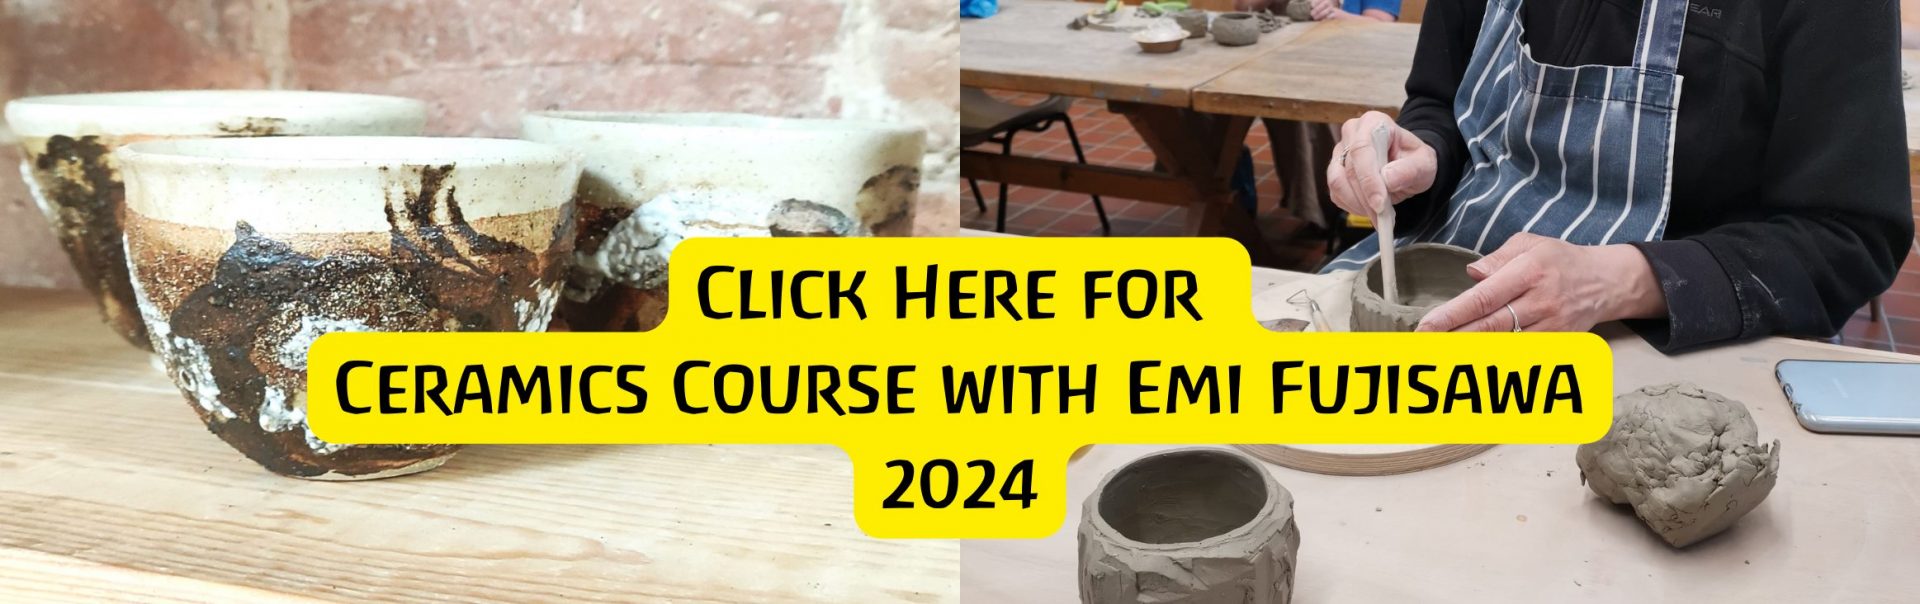 Ceramic Course with Emi Fujisawa 2024